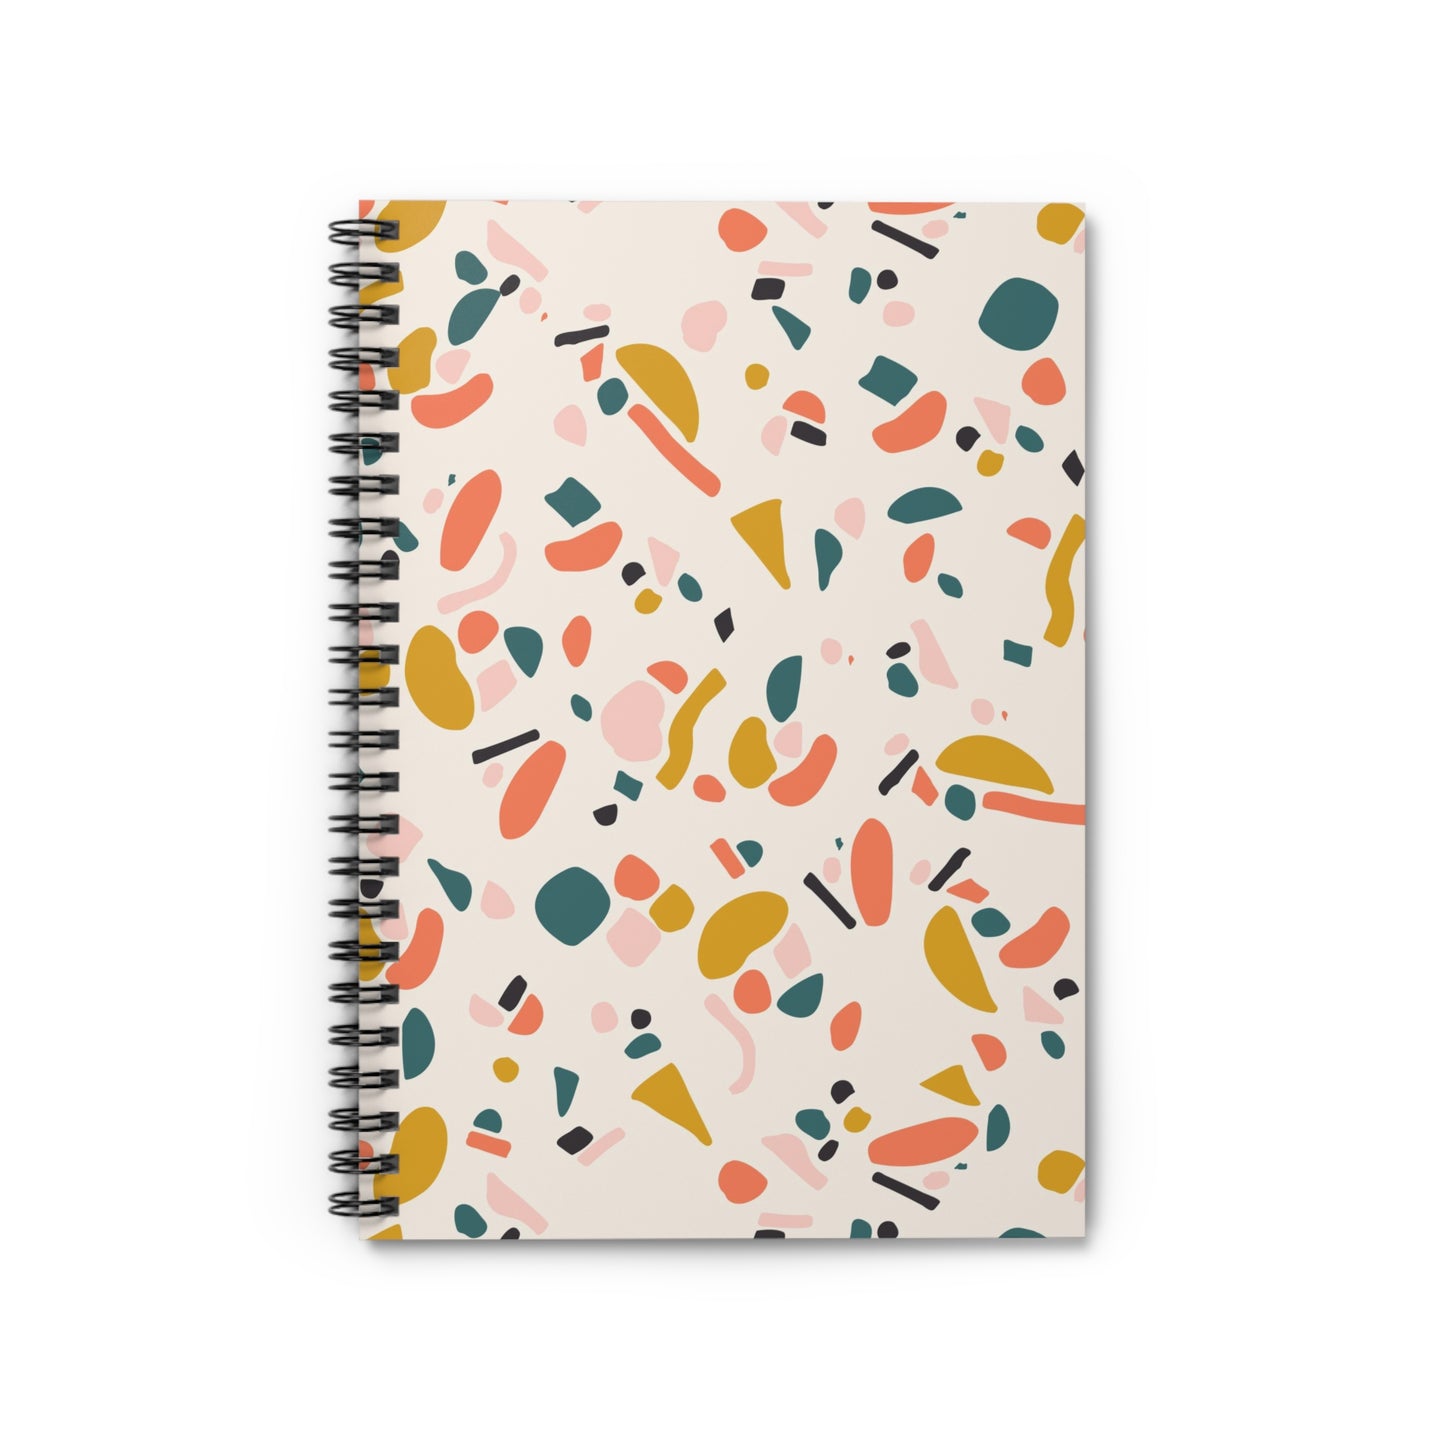 Spiral Notebook - Ruled Line, Terrazzo